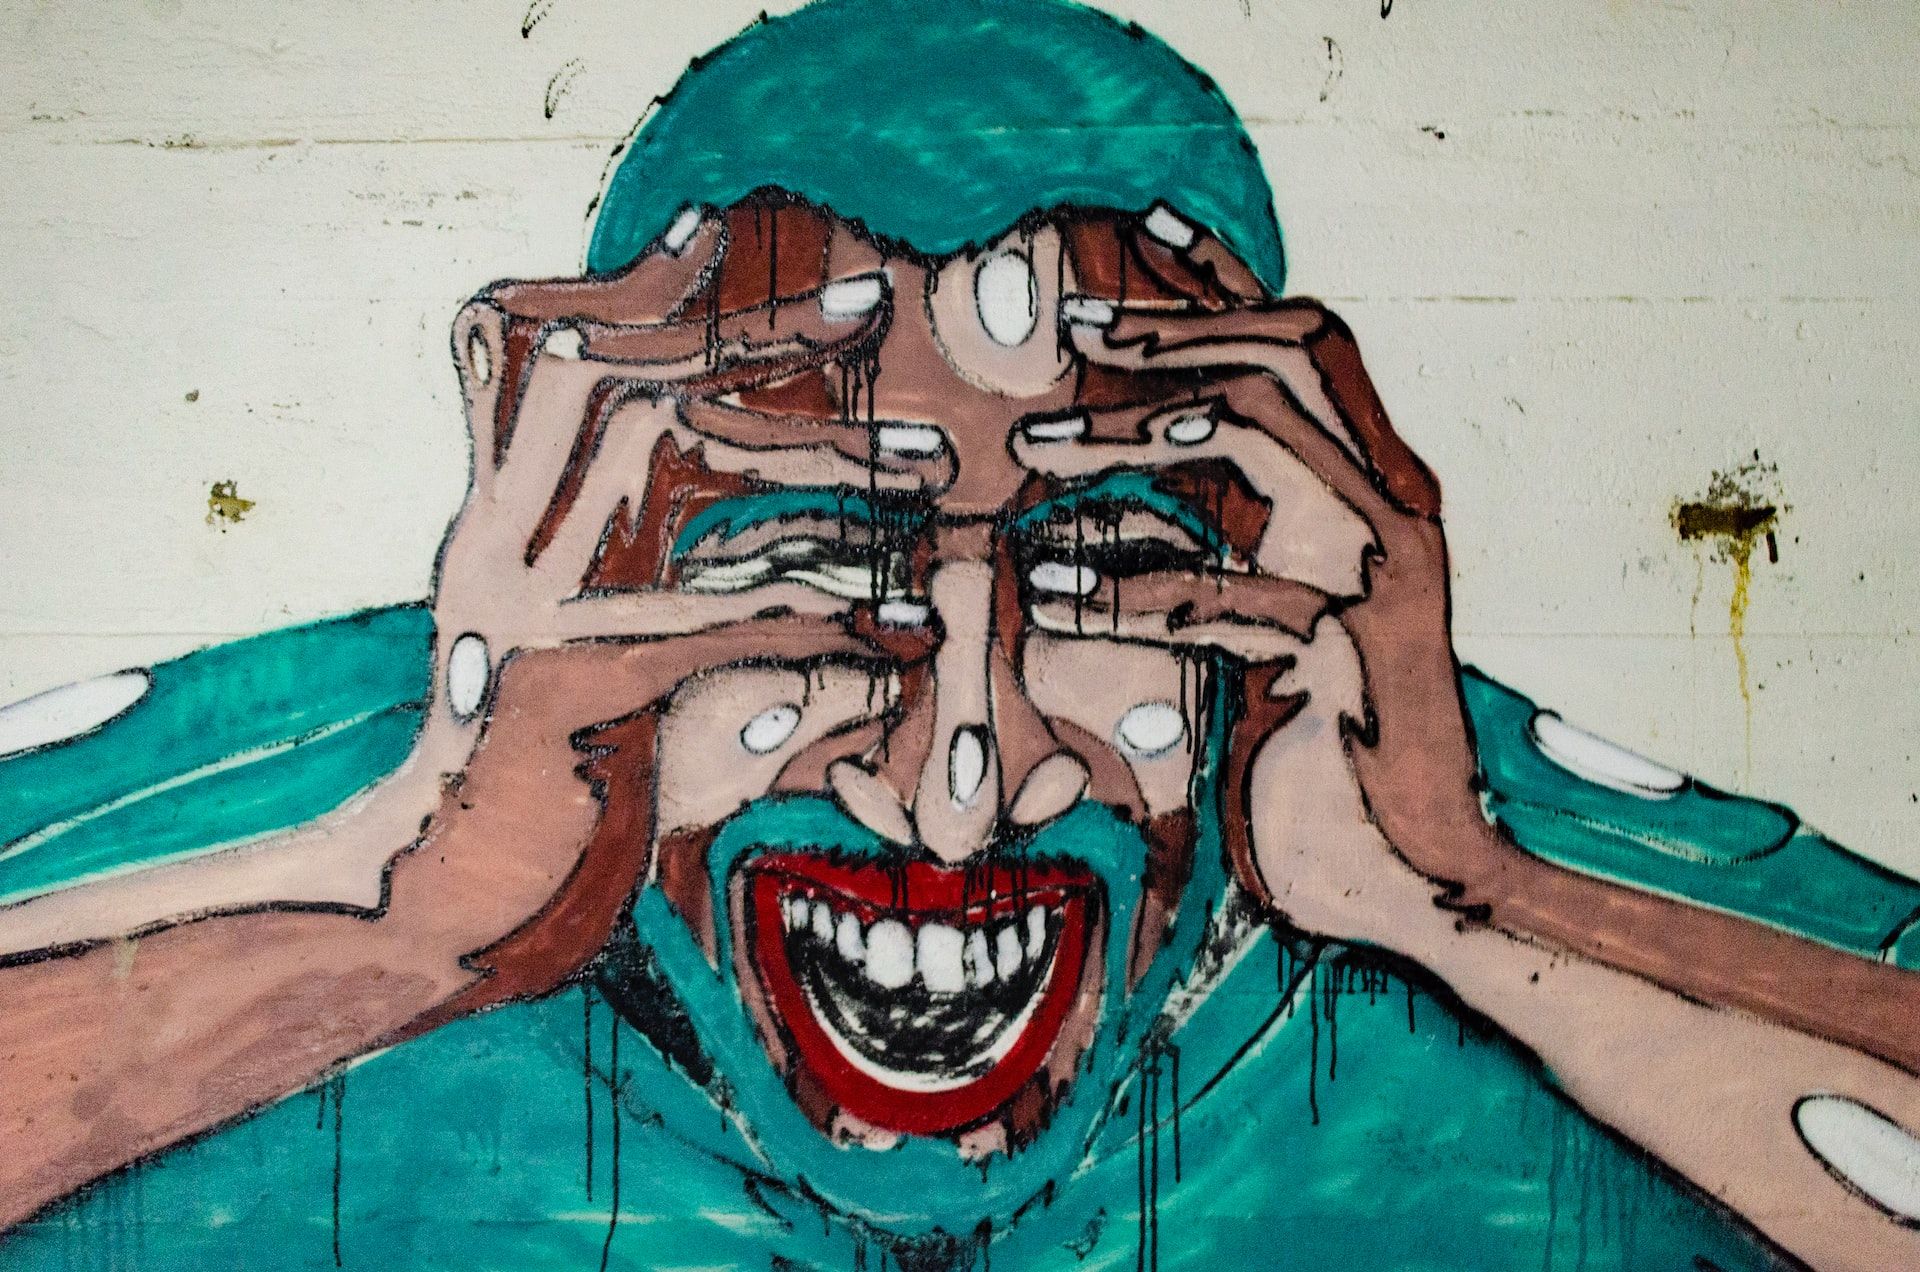 Street art of a man looking sressed